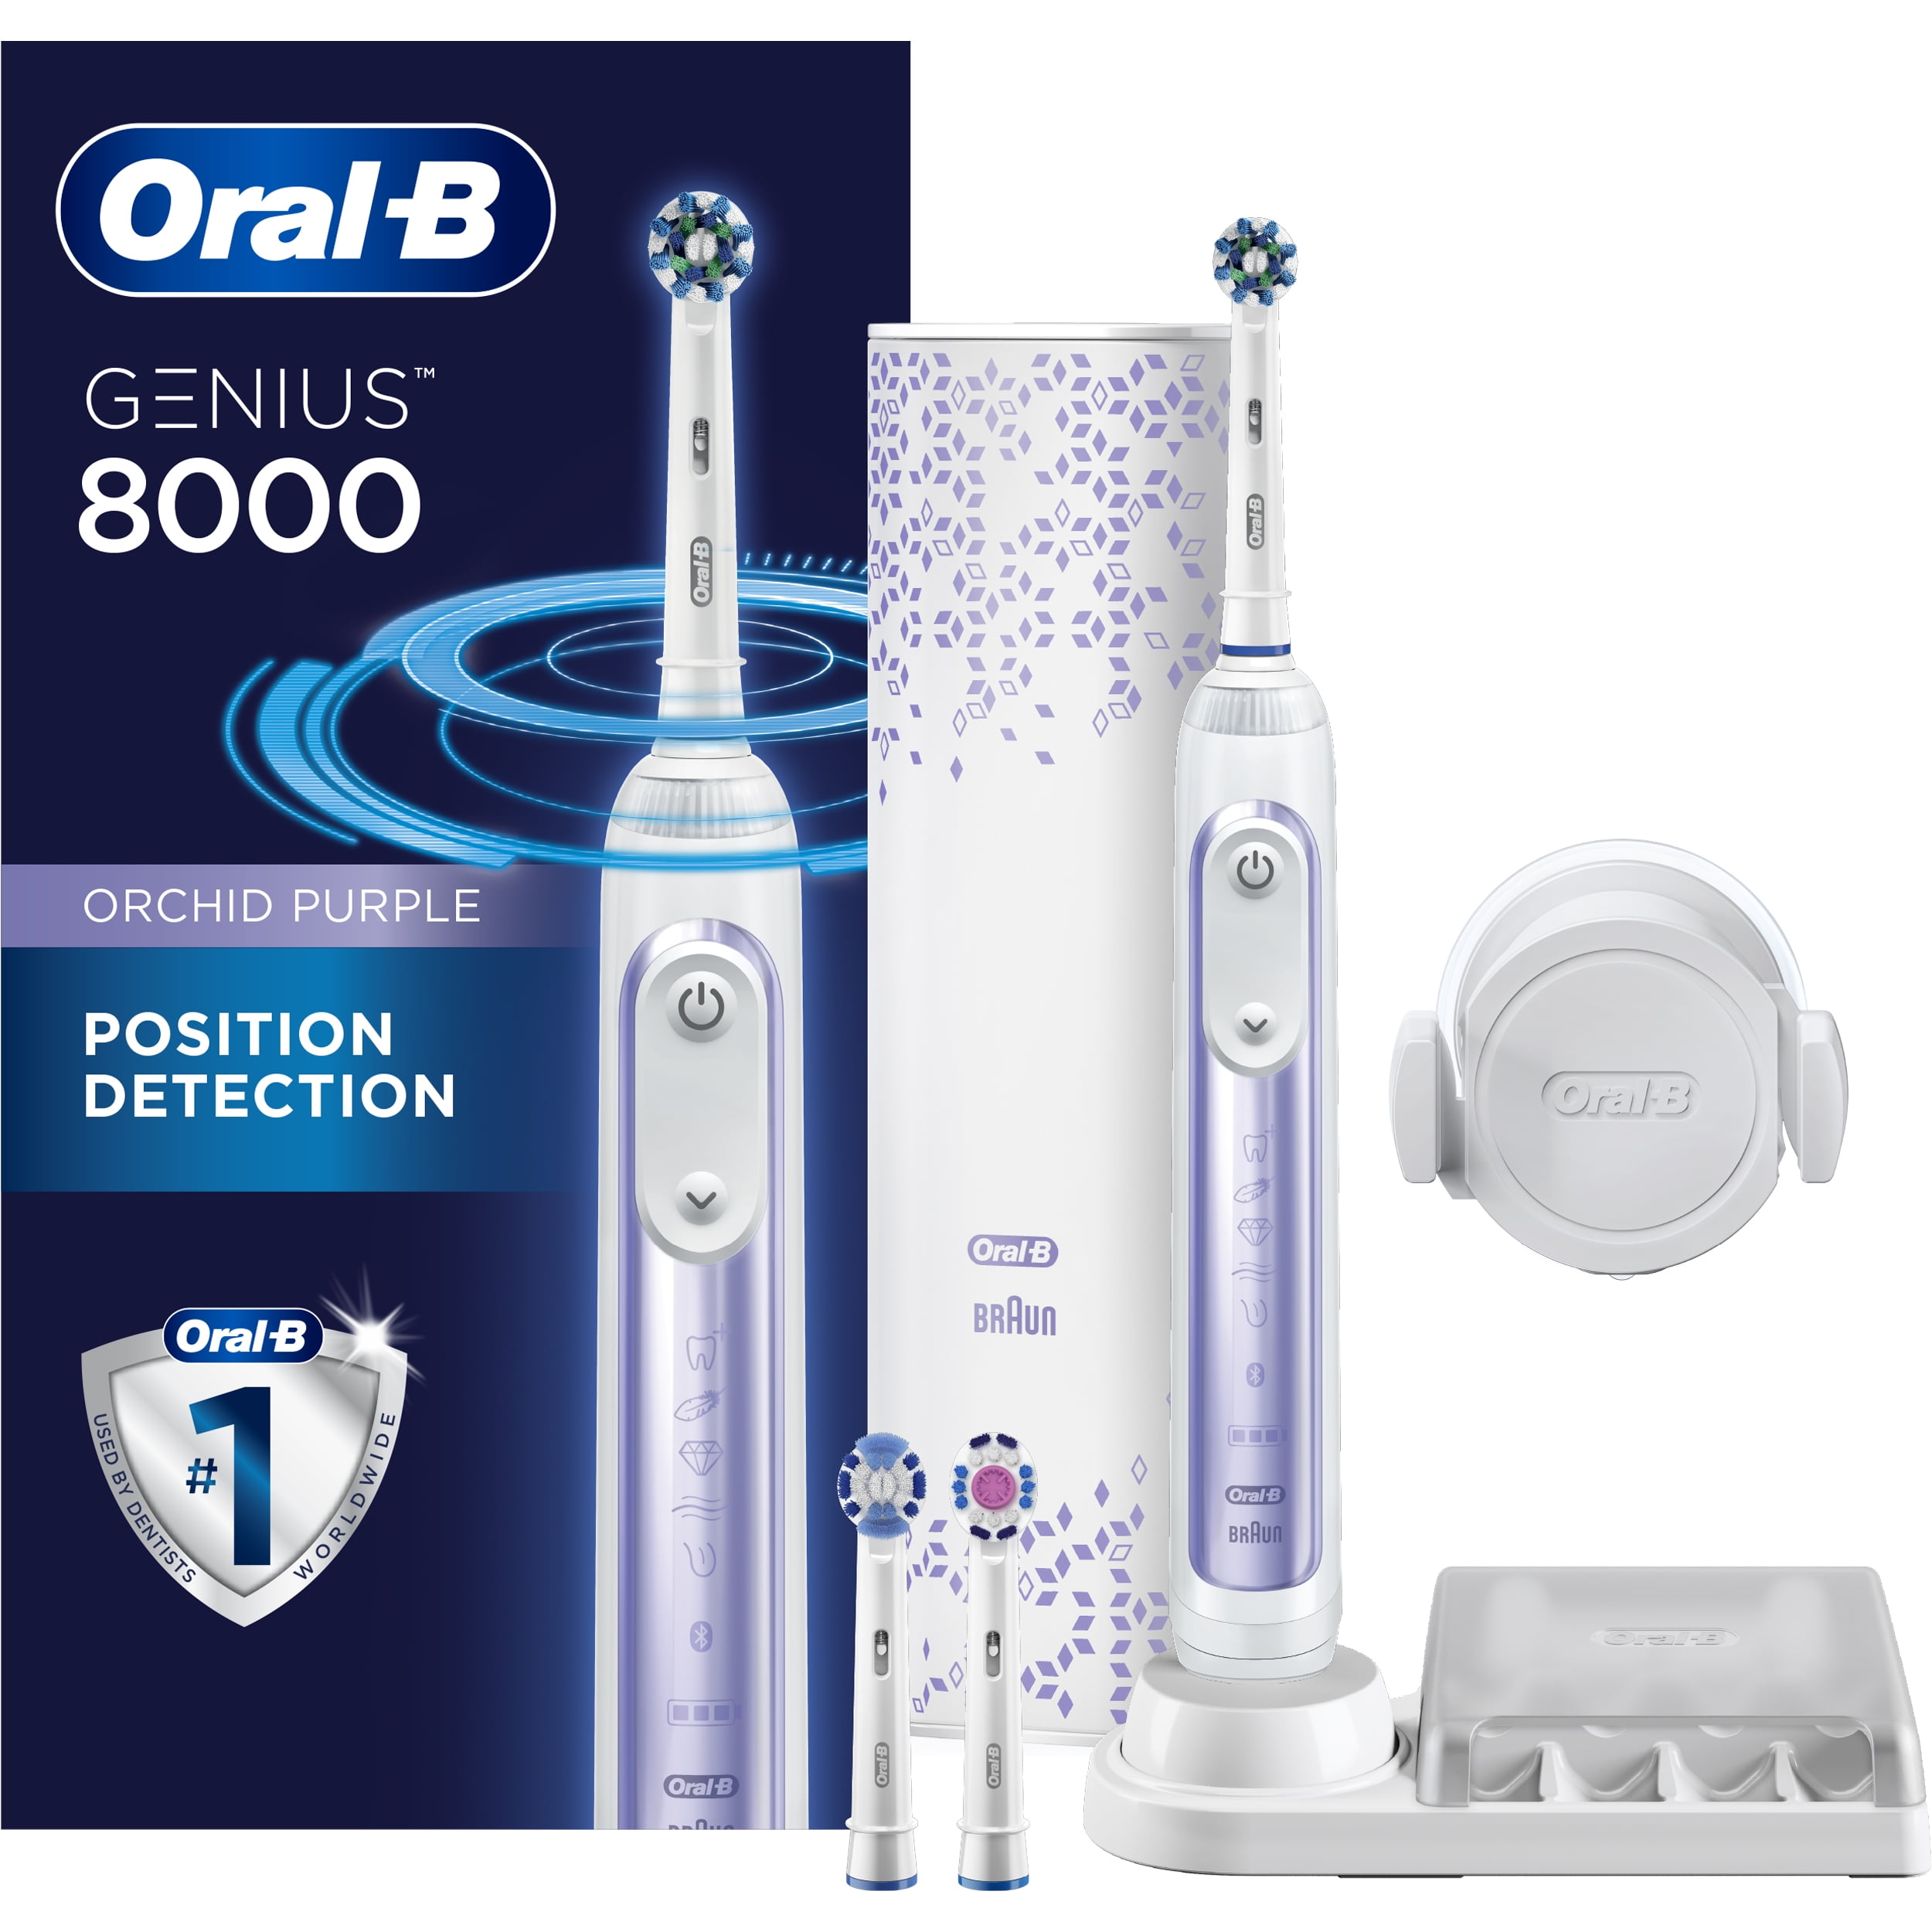 Oral-B 8000 Electronic Toothbrush, White, Powered by Braun